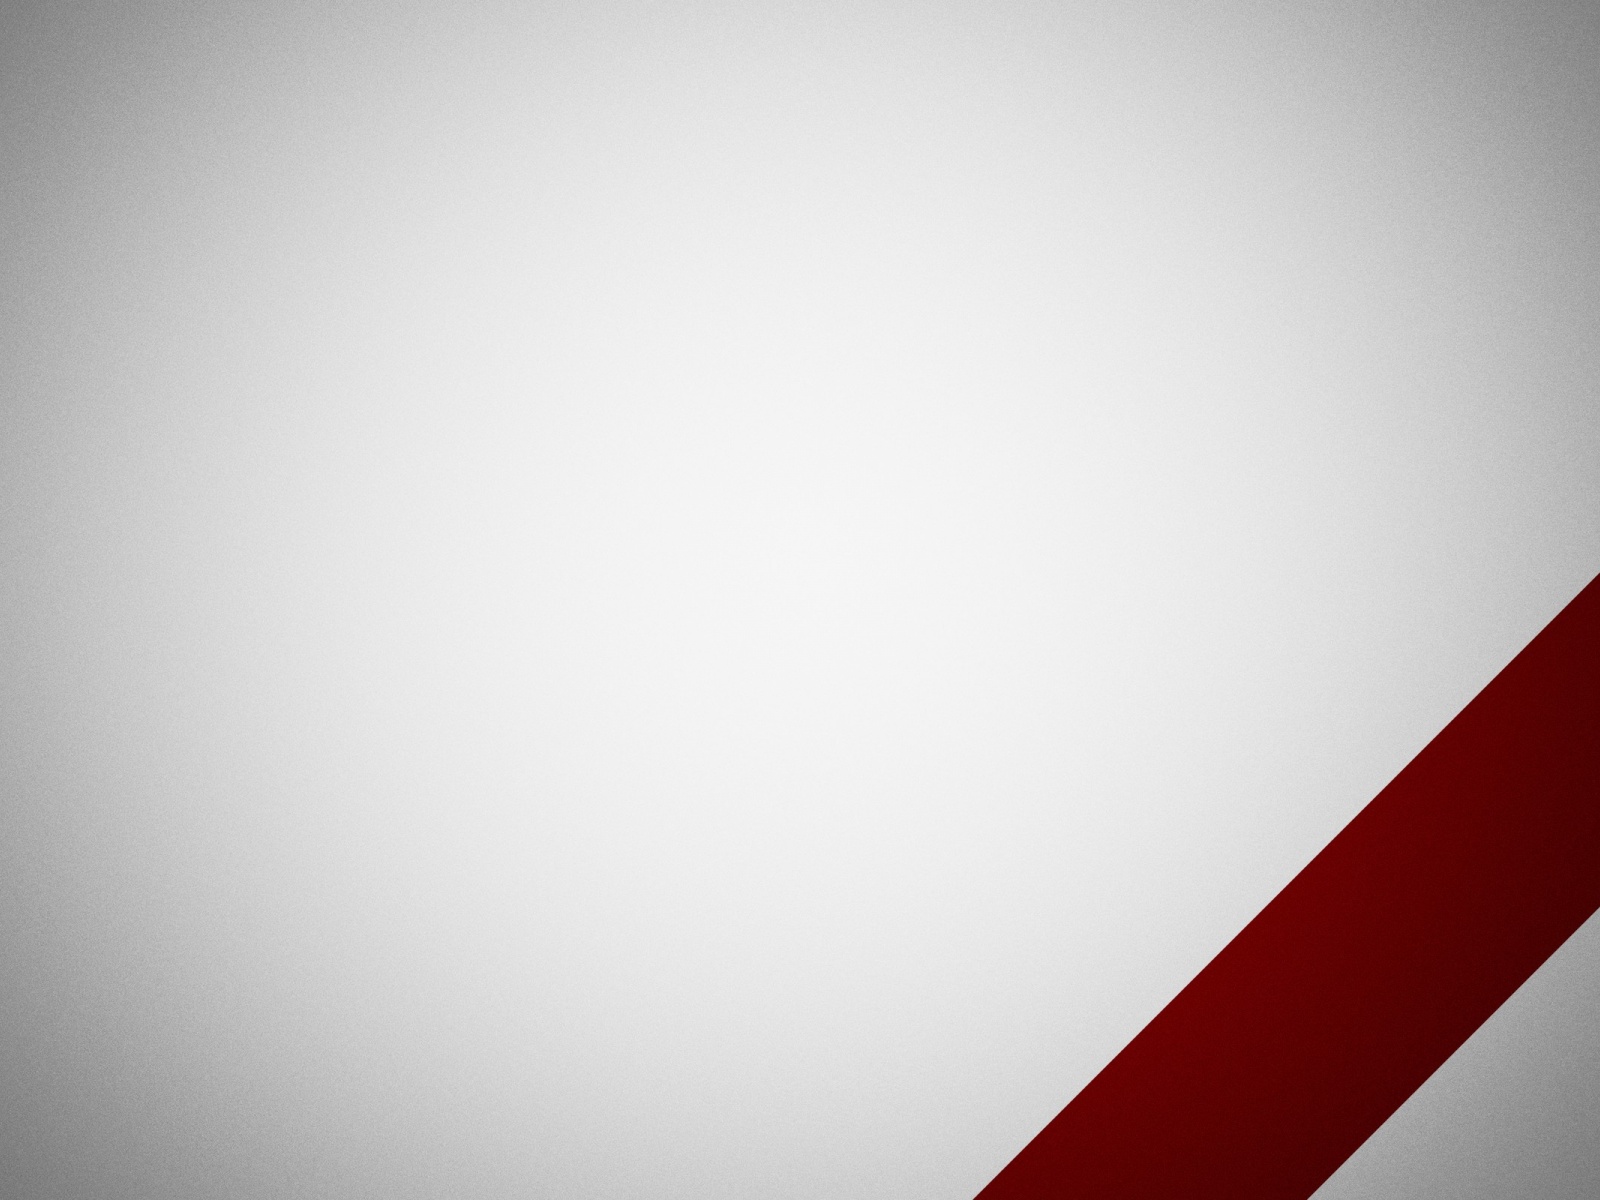 Red And White Desktop Pc Mac Wallpaper